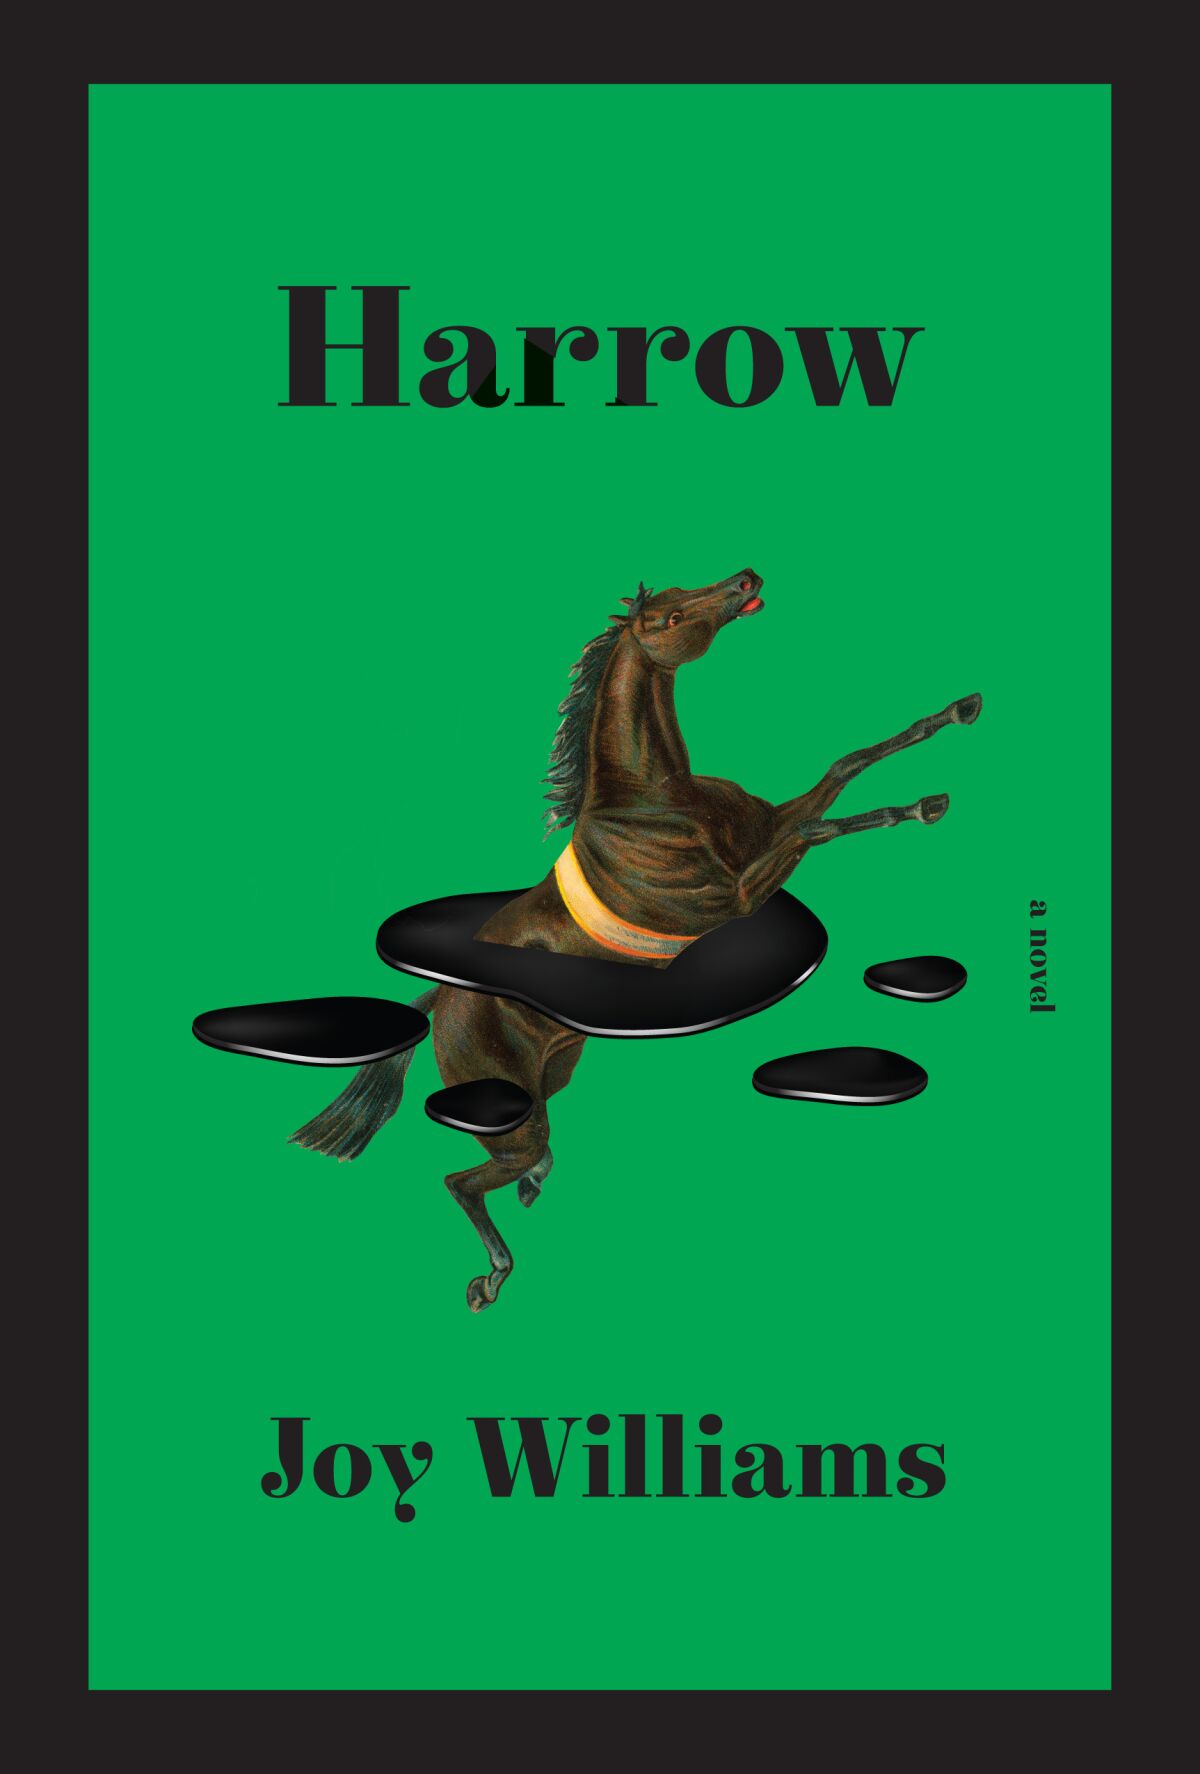 "Harrow," by Joy Williams